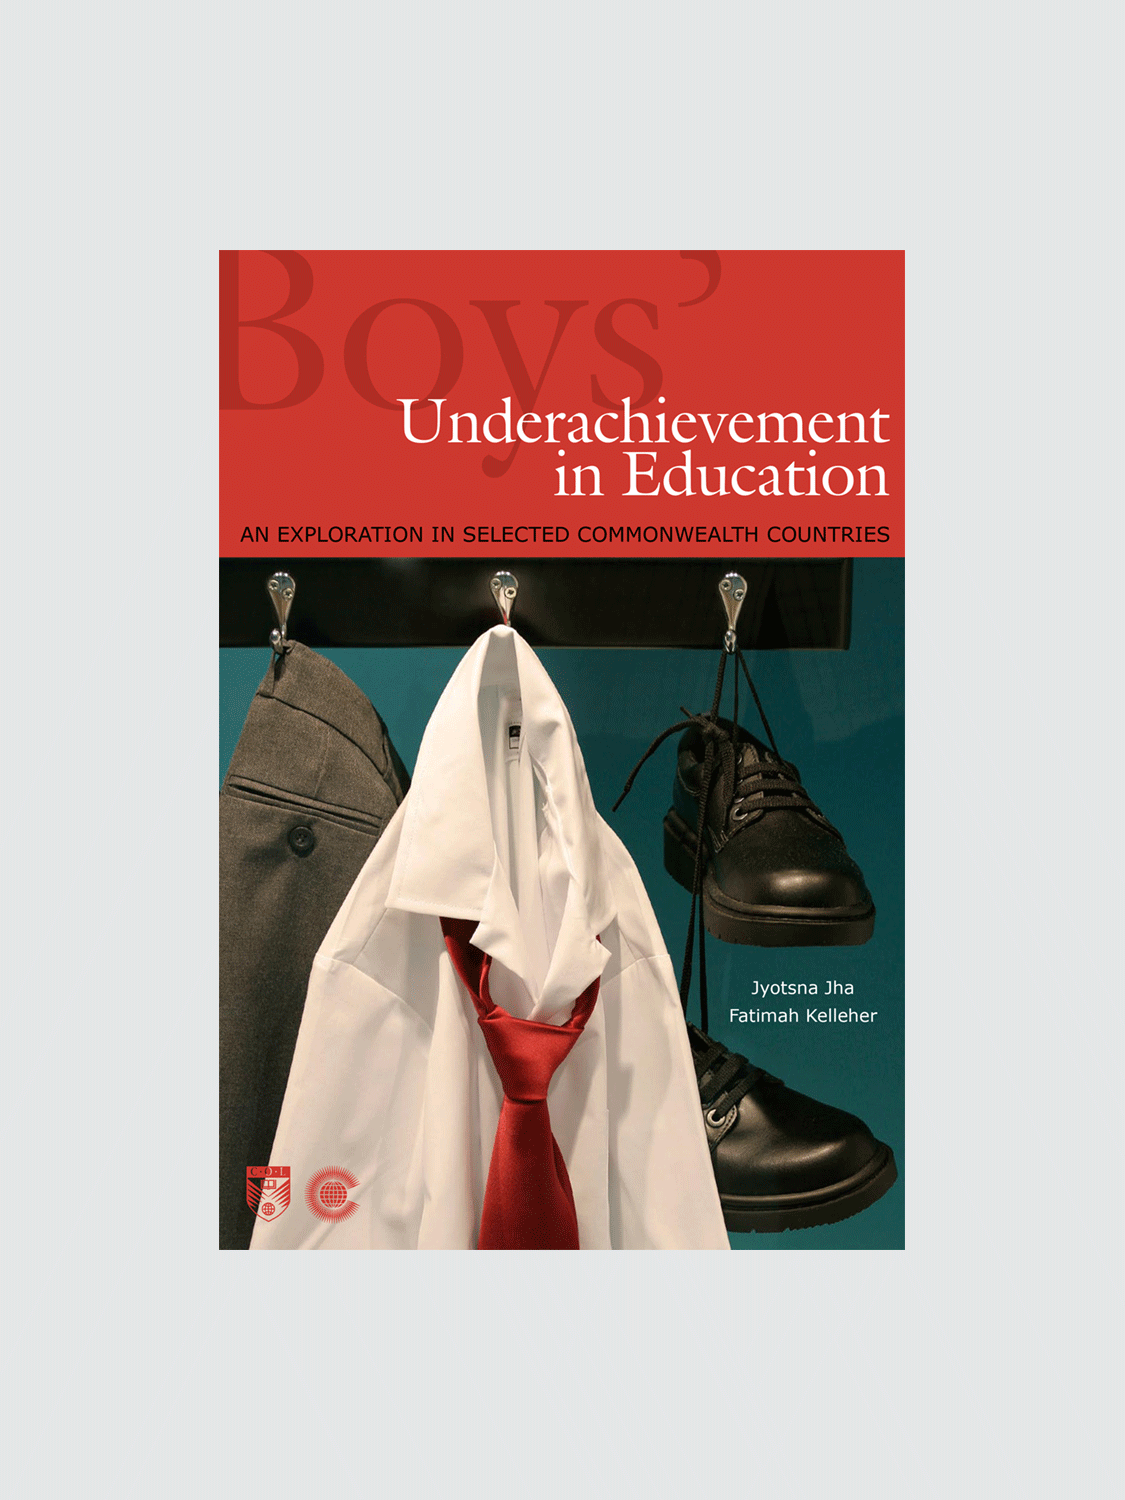 Book: Boys' Underachievement in Education